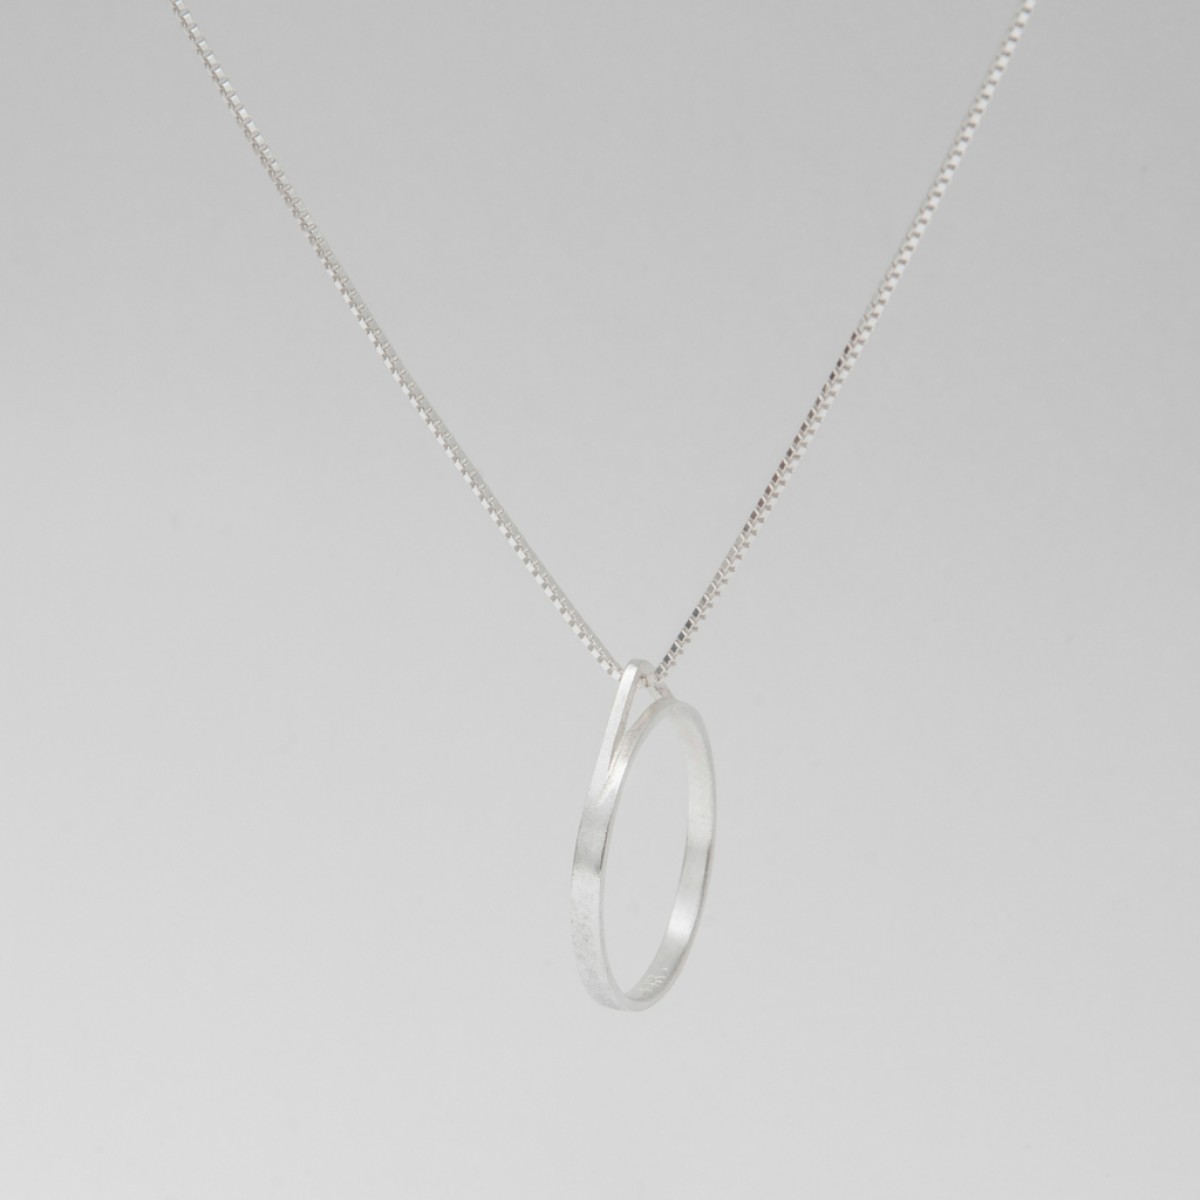 Jonathan Radetz Jewellery, Kette TRI, Länge 43cm, Silber 925